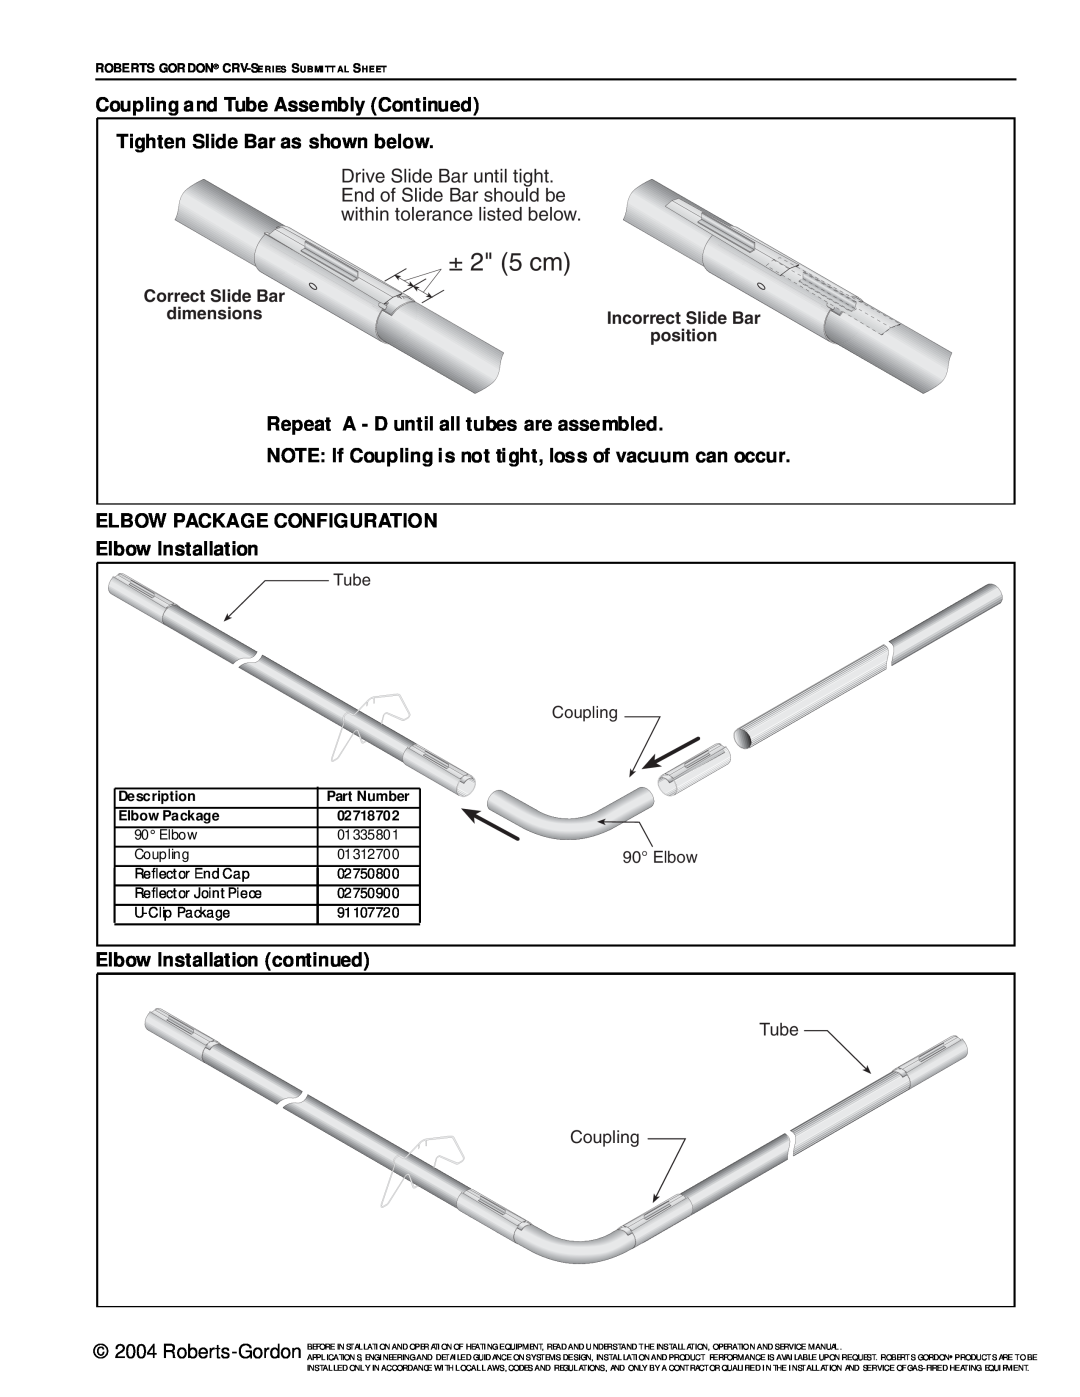 Roberts Gorden CRV-Series ± 2 5 cm, Correct Slide Bar dimensions, Incorrect Slide Bar position, Description, Elbow Package 